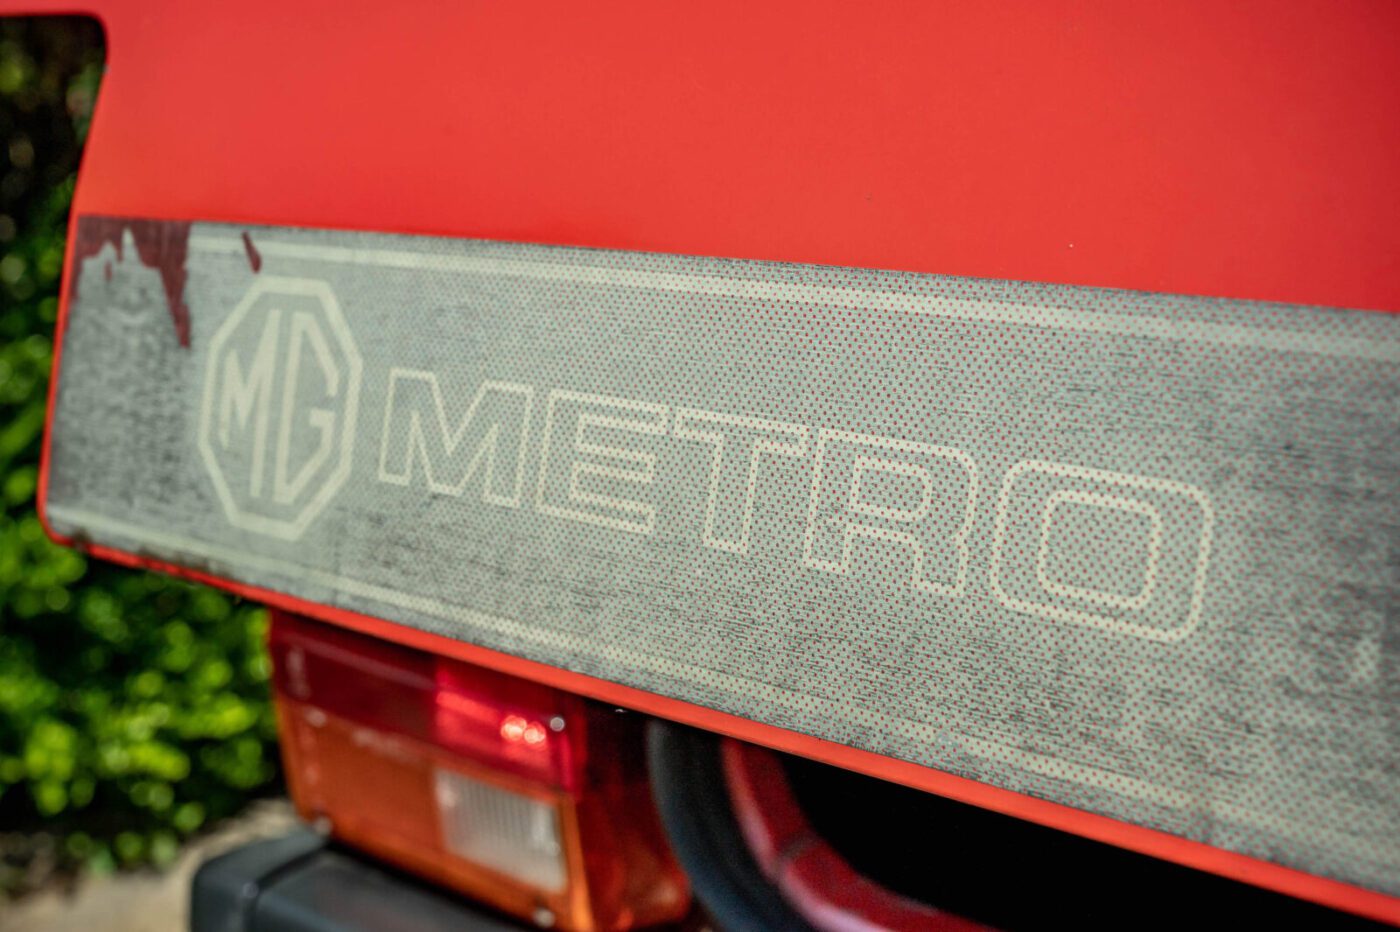 MG Metro sticker